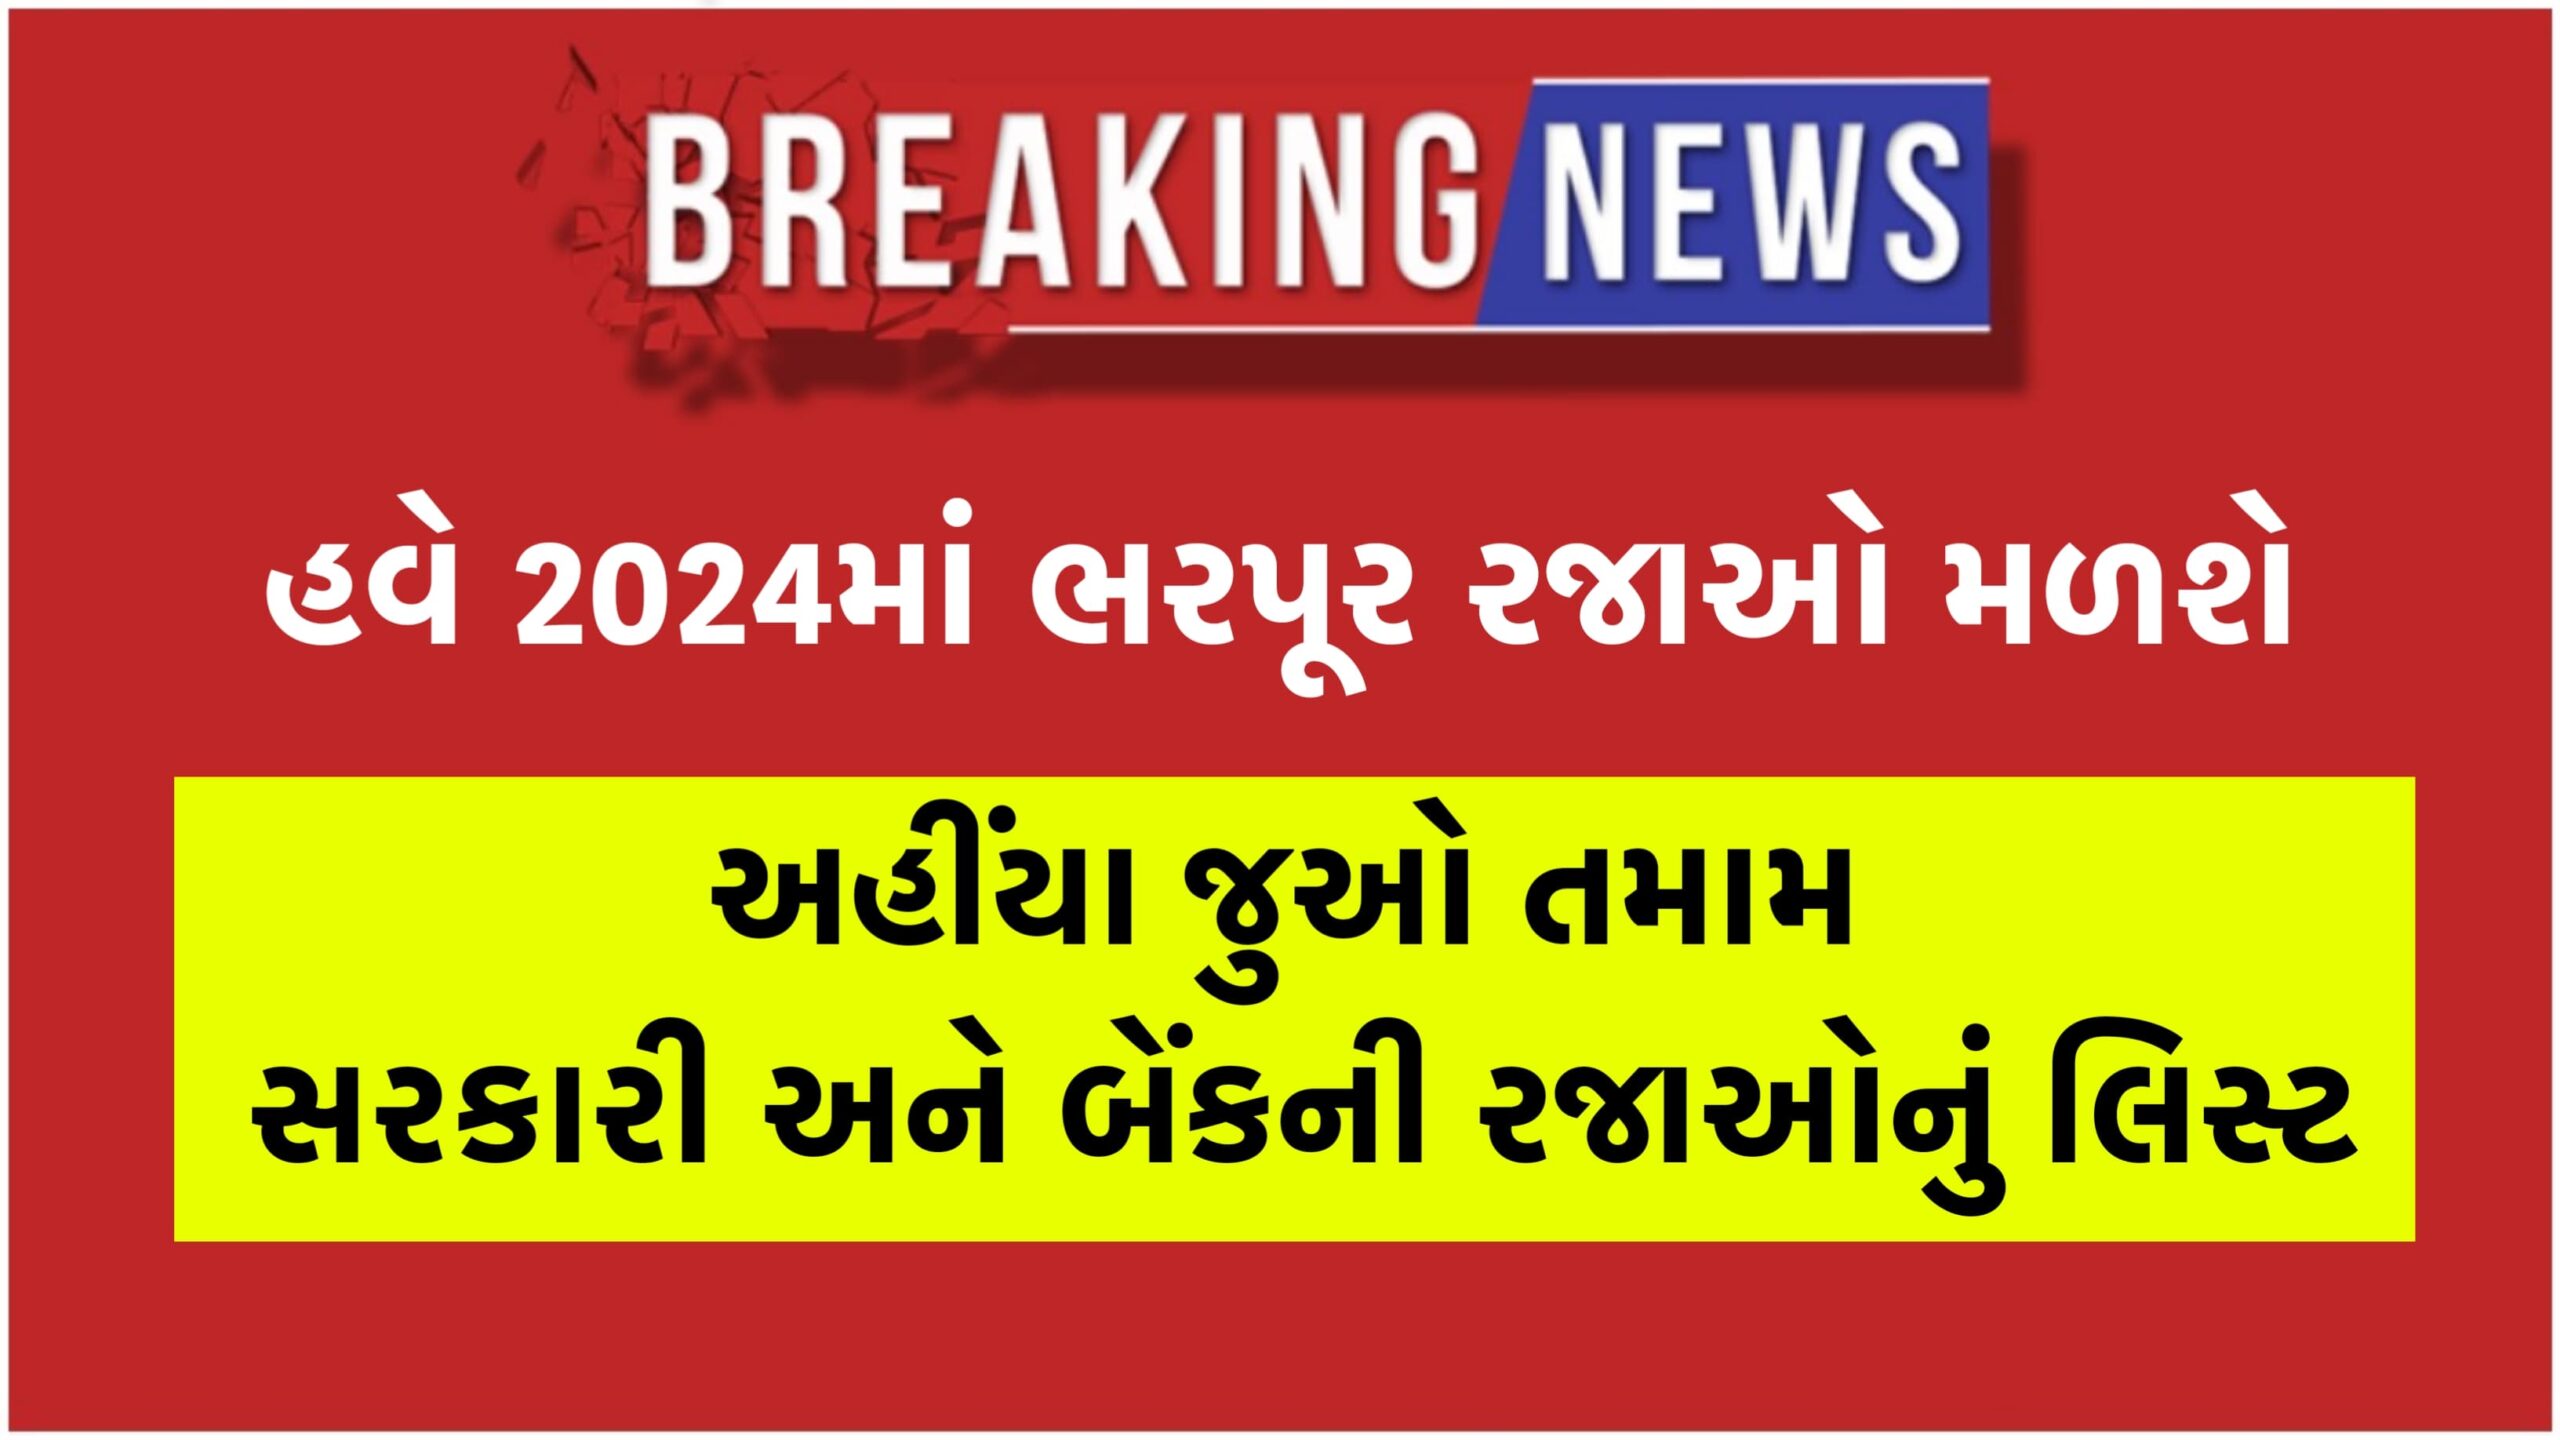 Gujarat Holidays in 2024 હવે મળશે ભરપૂર રજાઓ, બેન્ક અને સરકારી